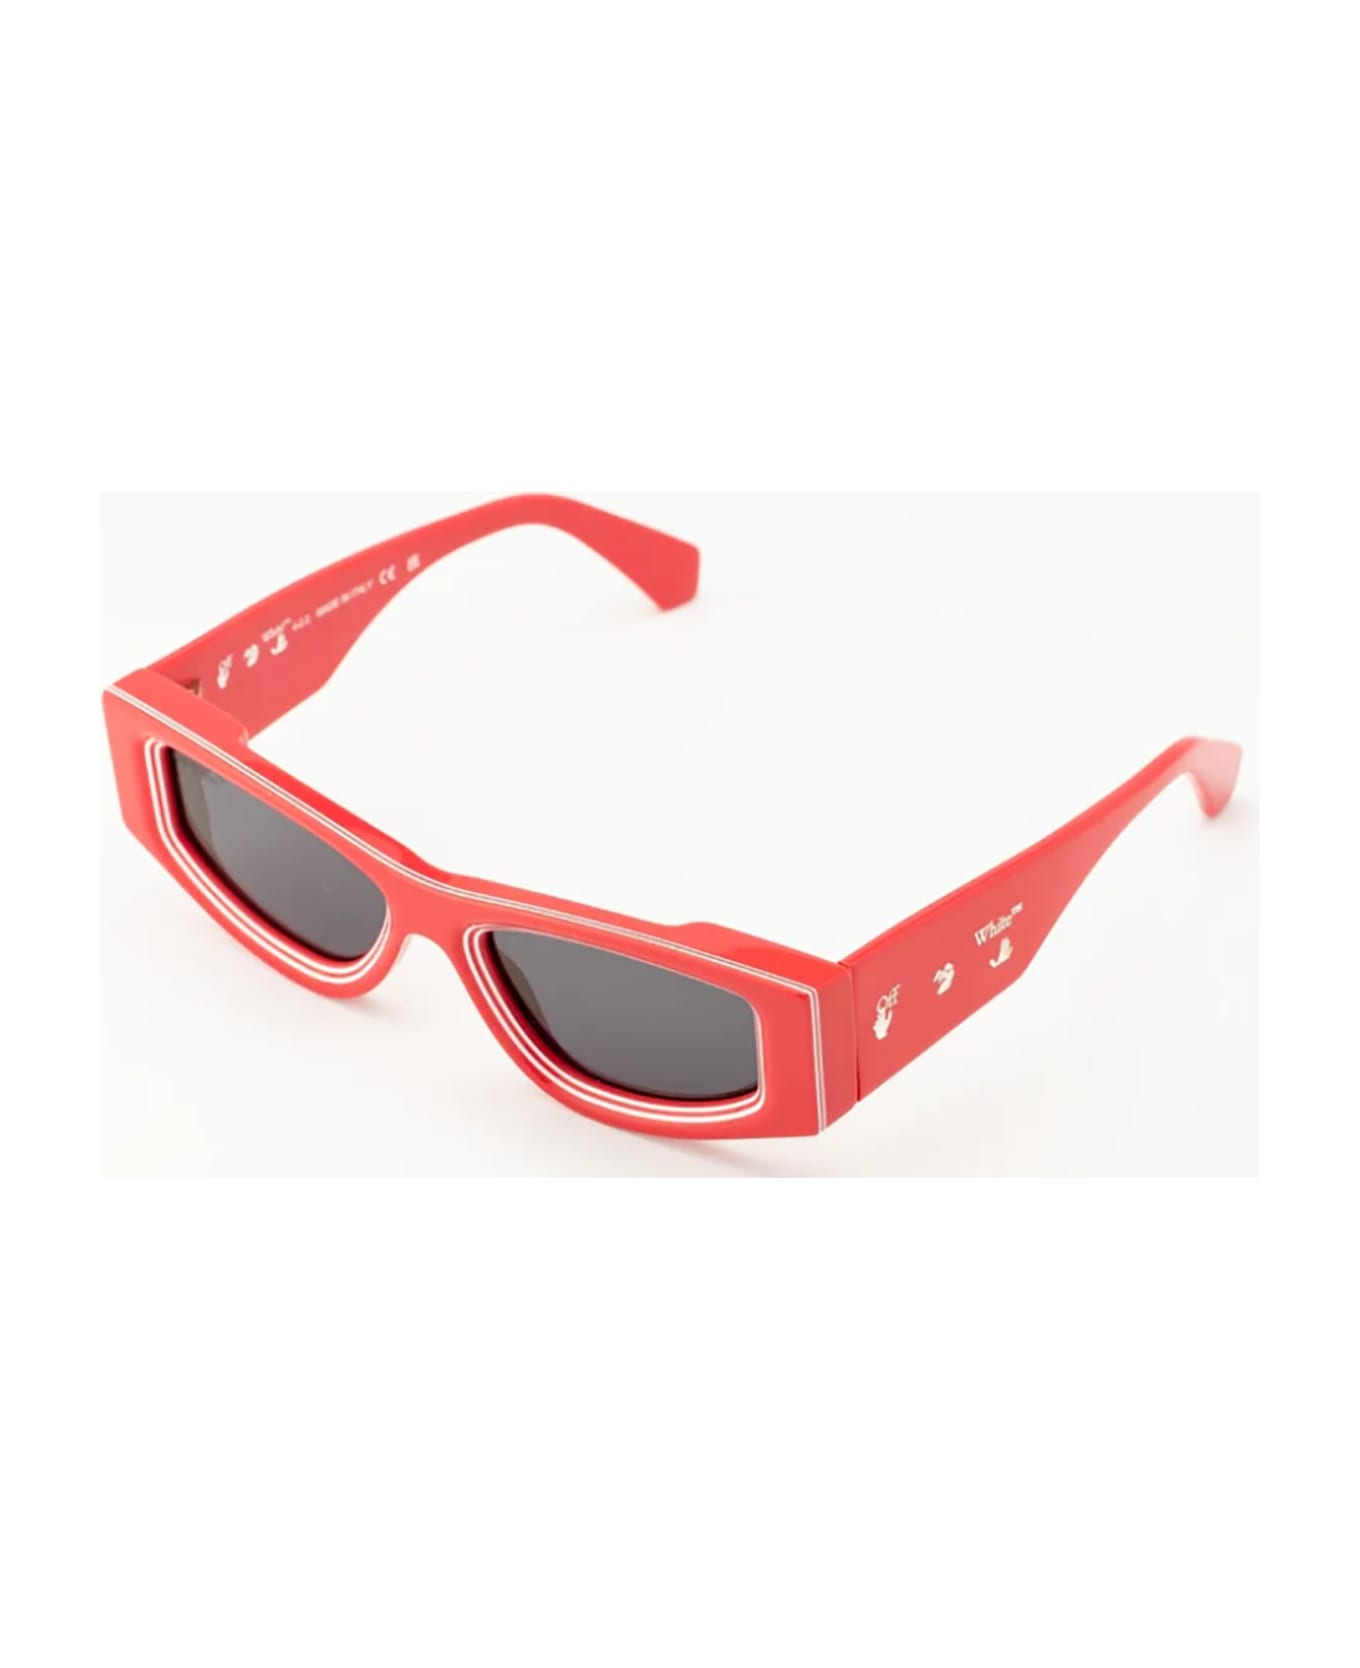 Off-White ANDY SUNGLASSES Sunglasses - Red サングラス